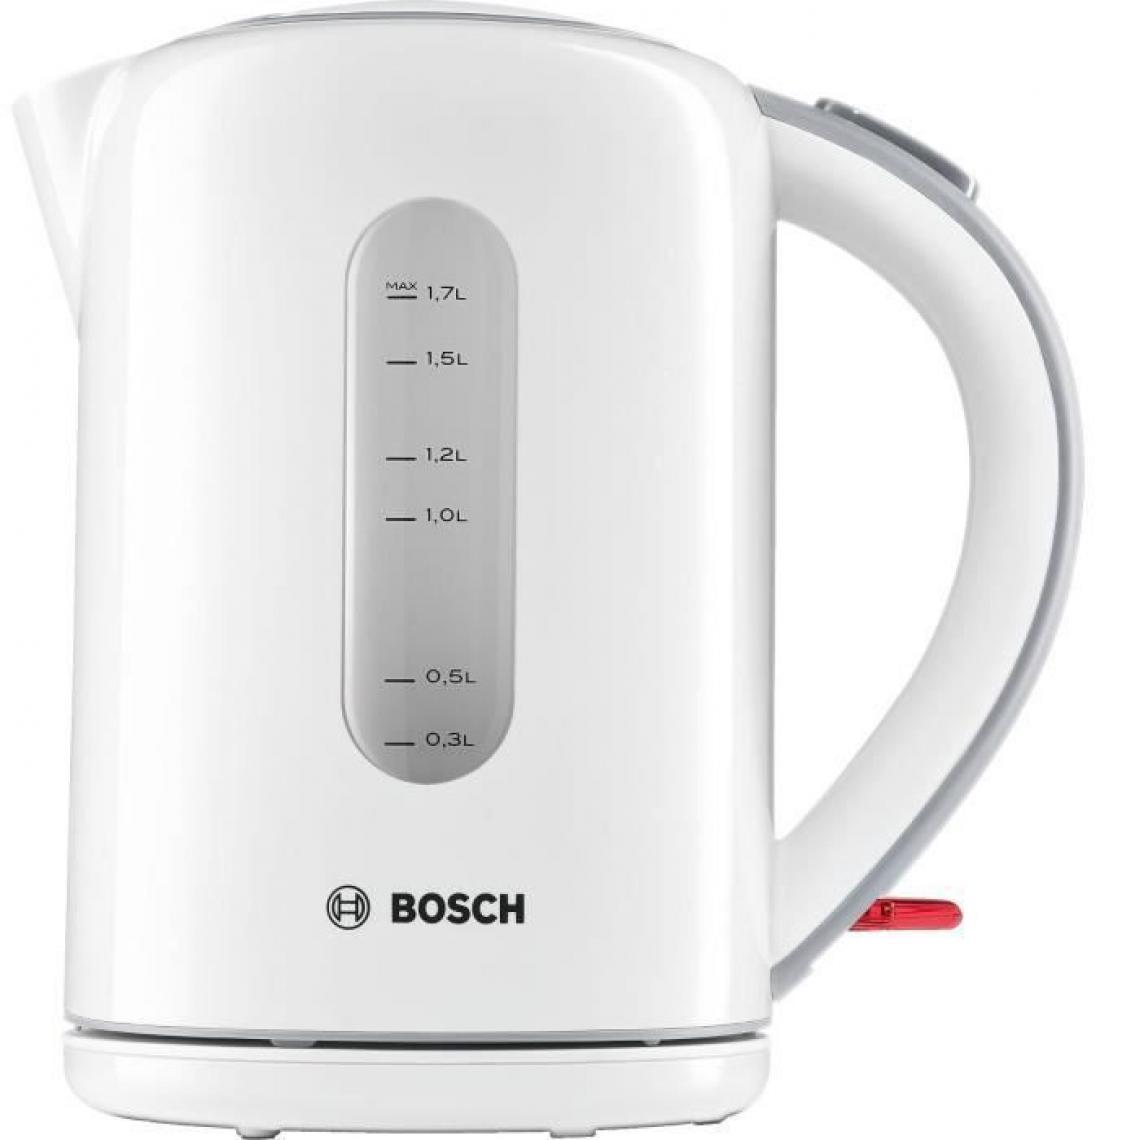 Bosch - bosch - twk7601 - Bouilloire